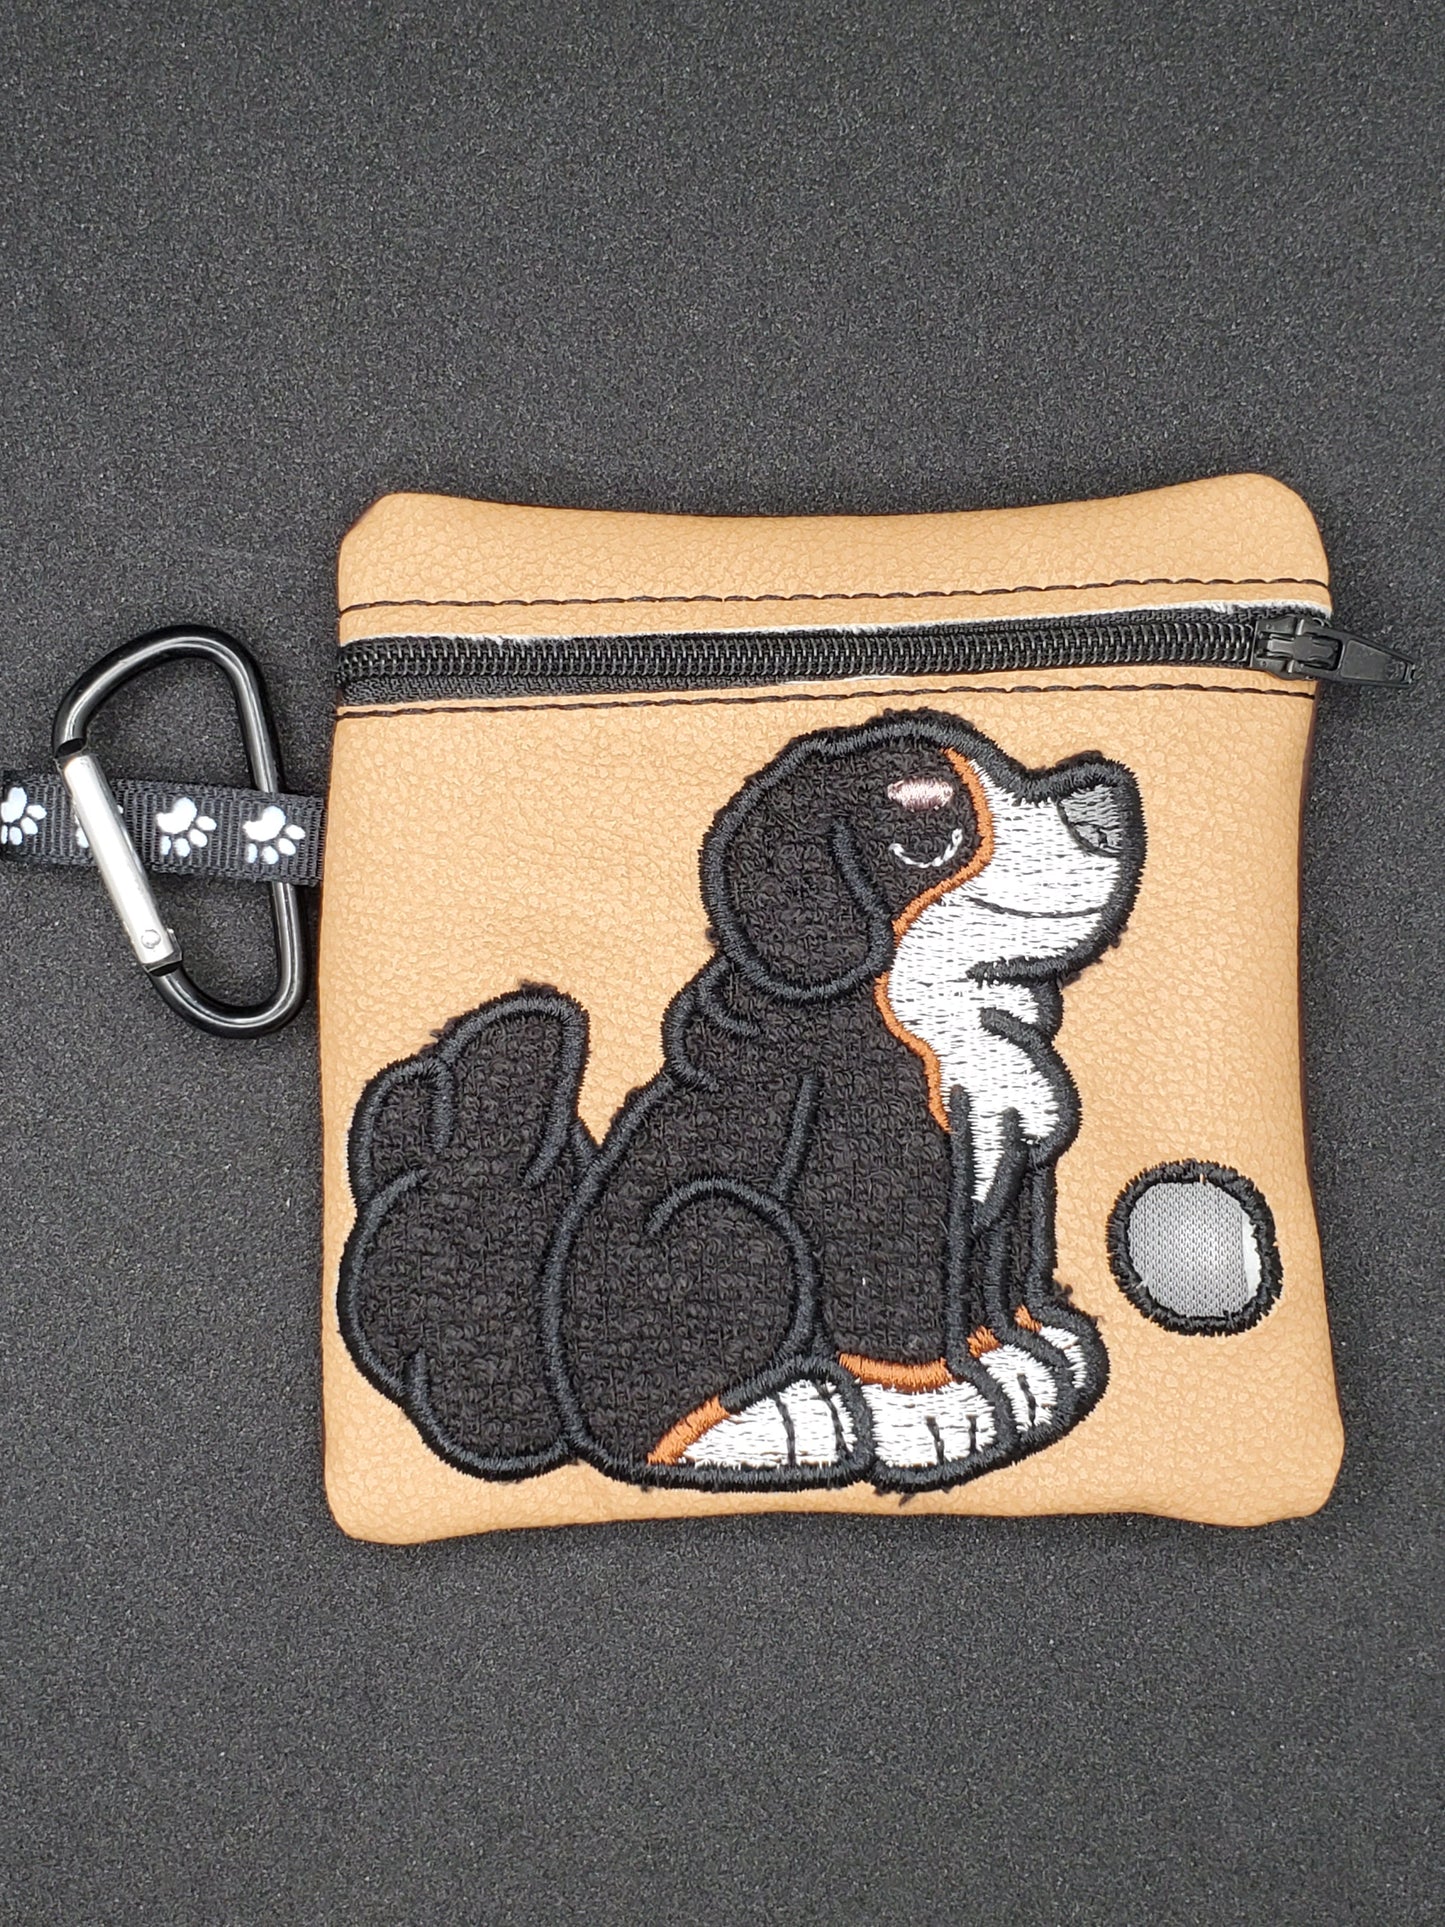 Bernese Mountain Dog - Pet Poo/waste bag holder / Faux Leather Bag